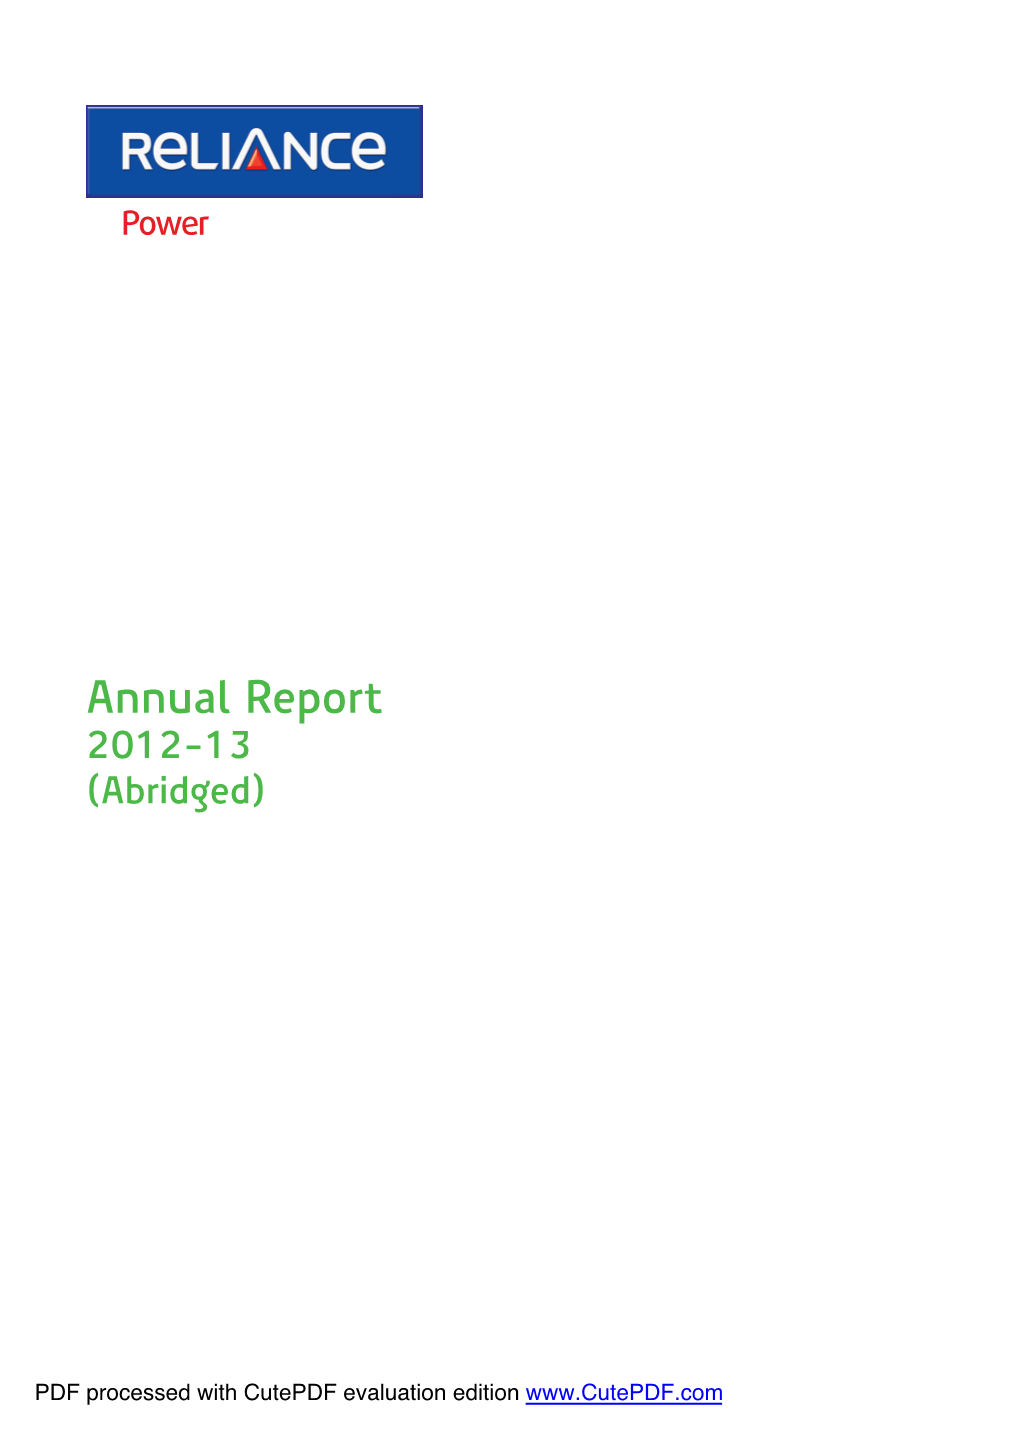 Annual Report 2012-13 (Abridged)